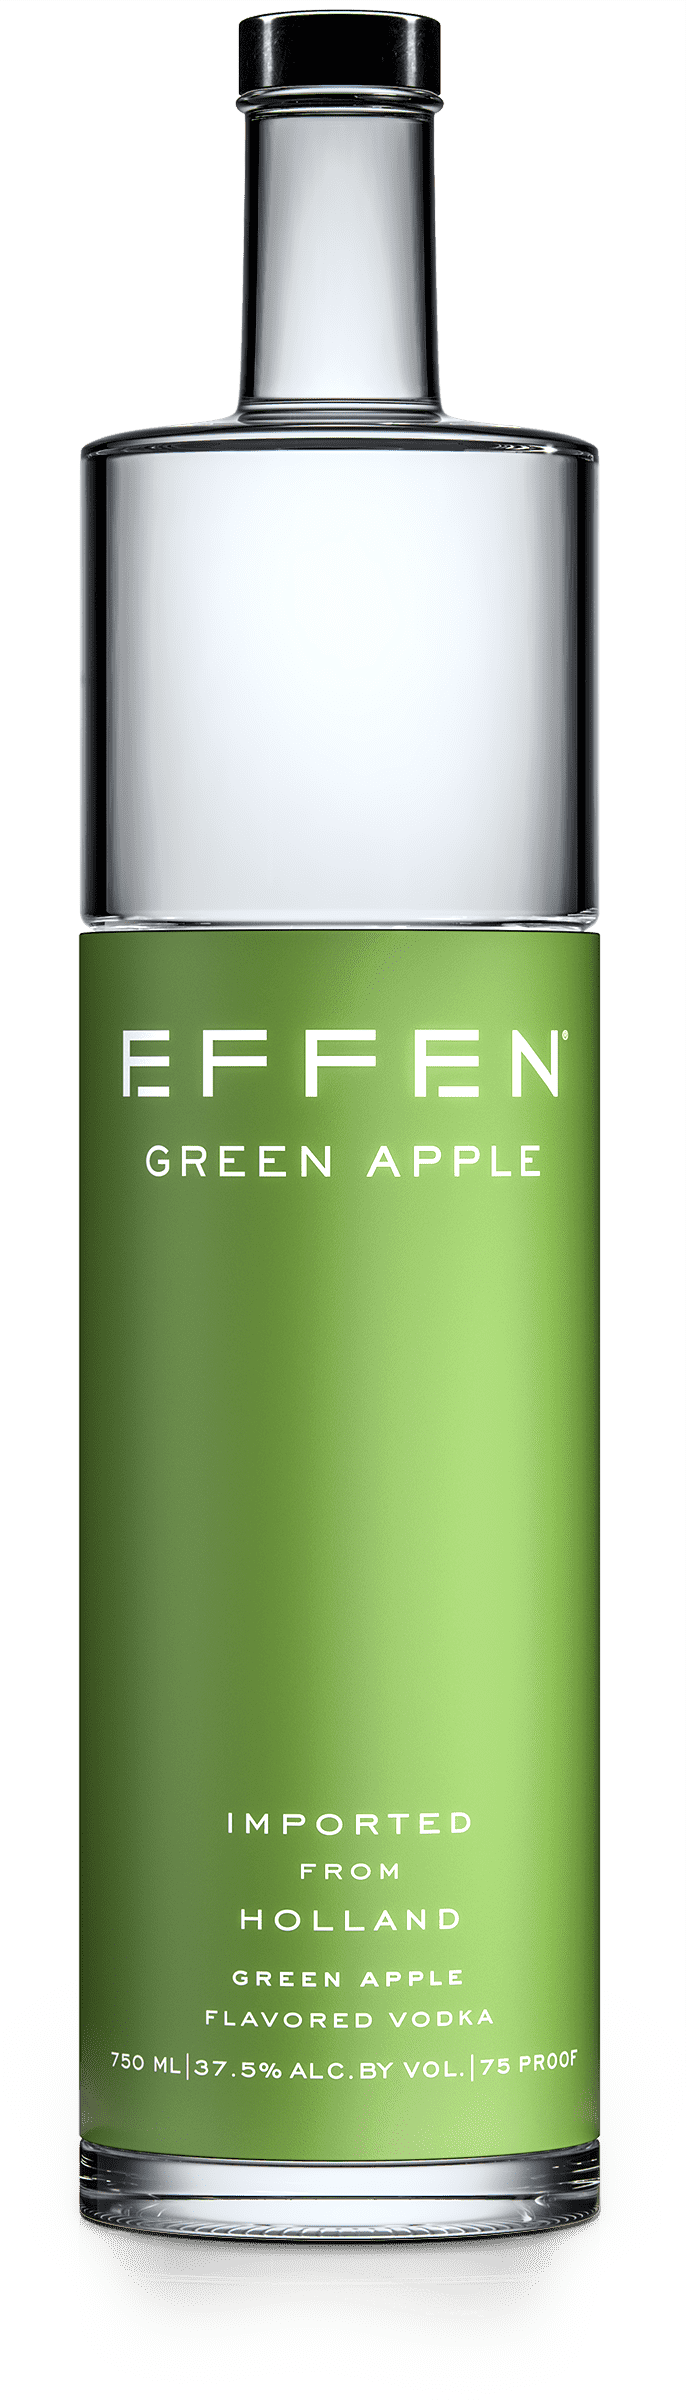 EFFEN Green Apple Vodka bottle shot